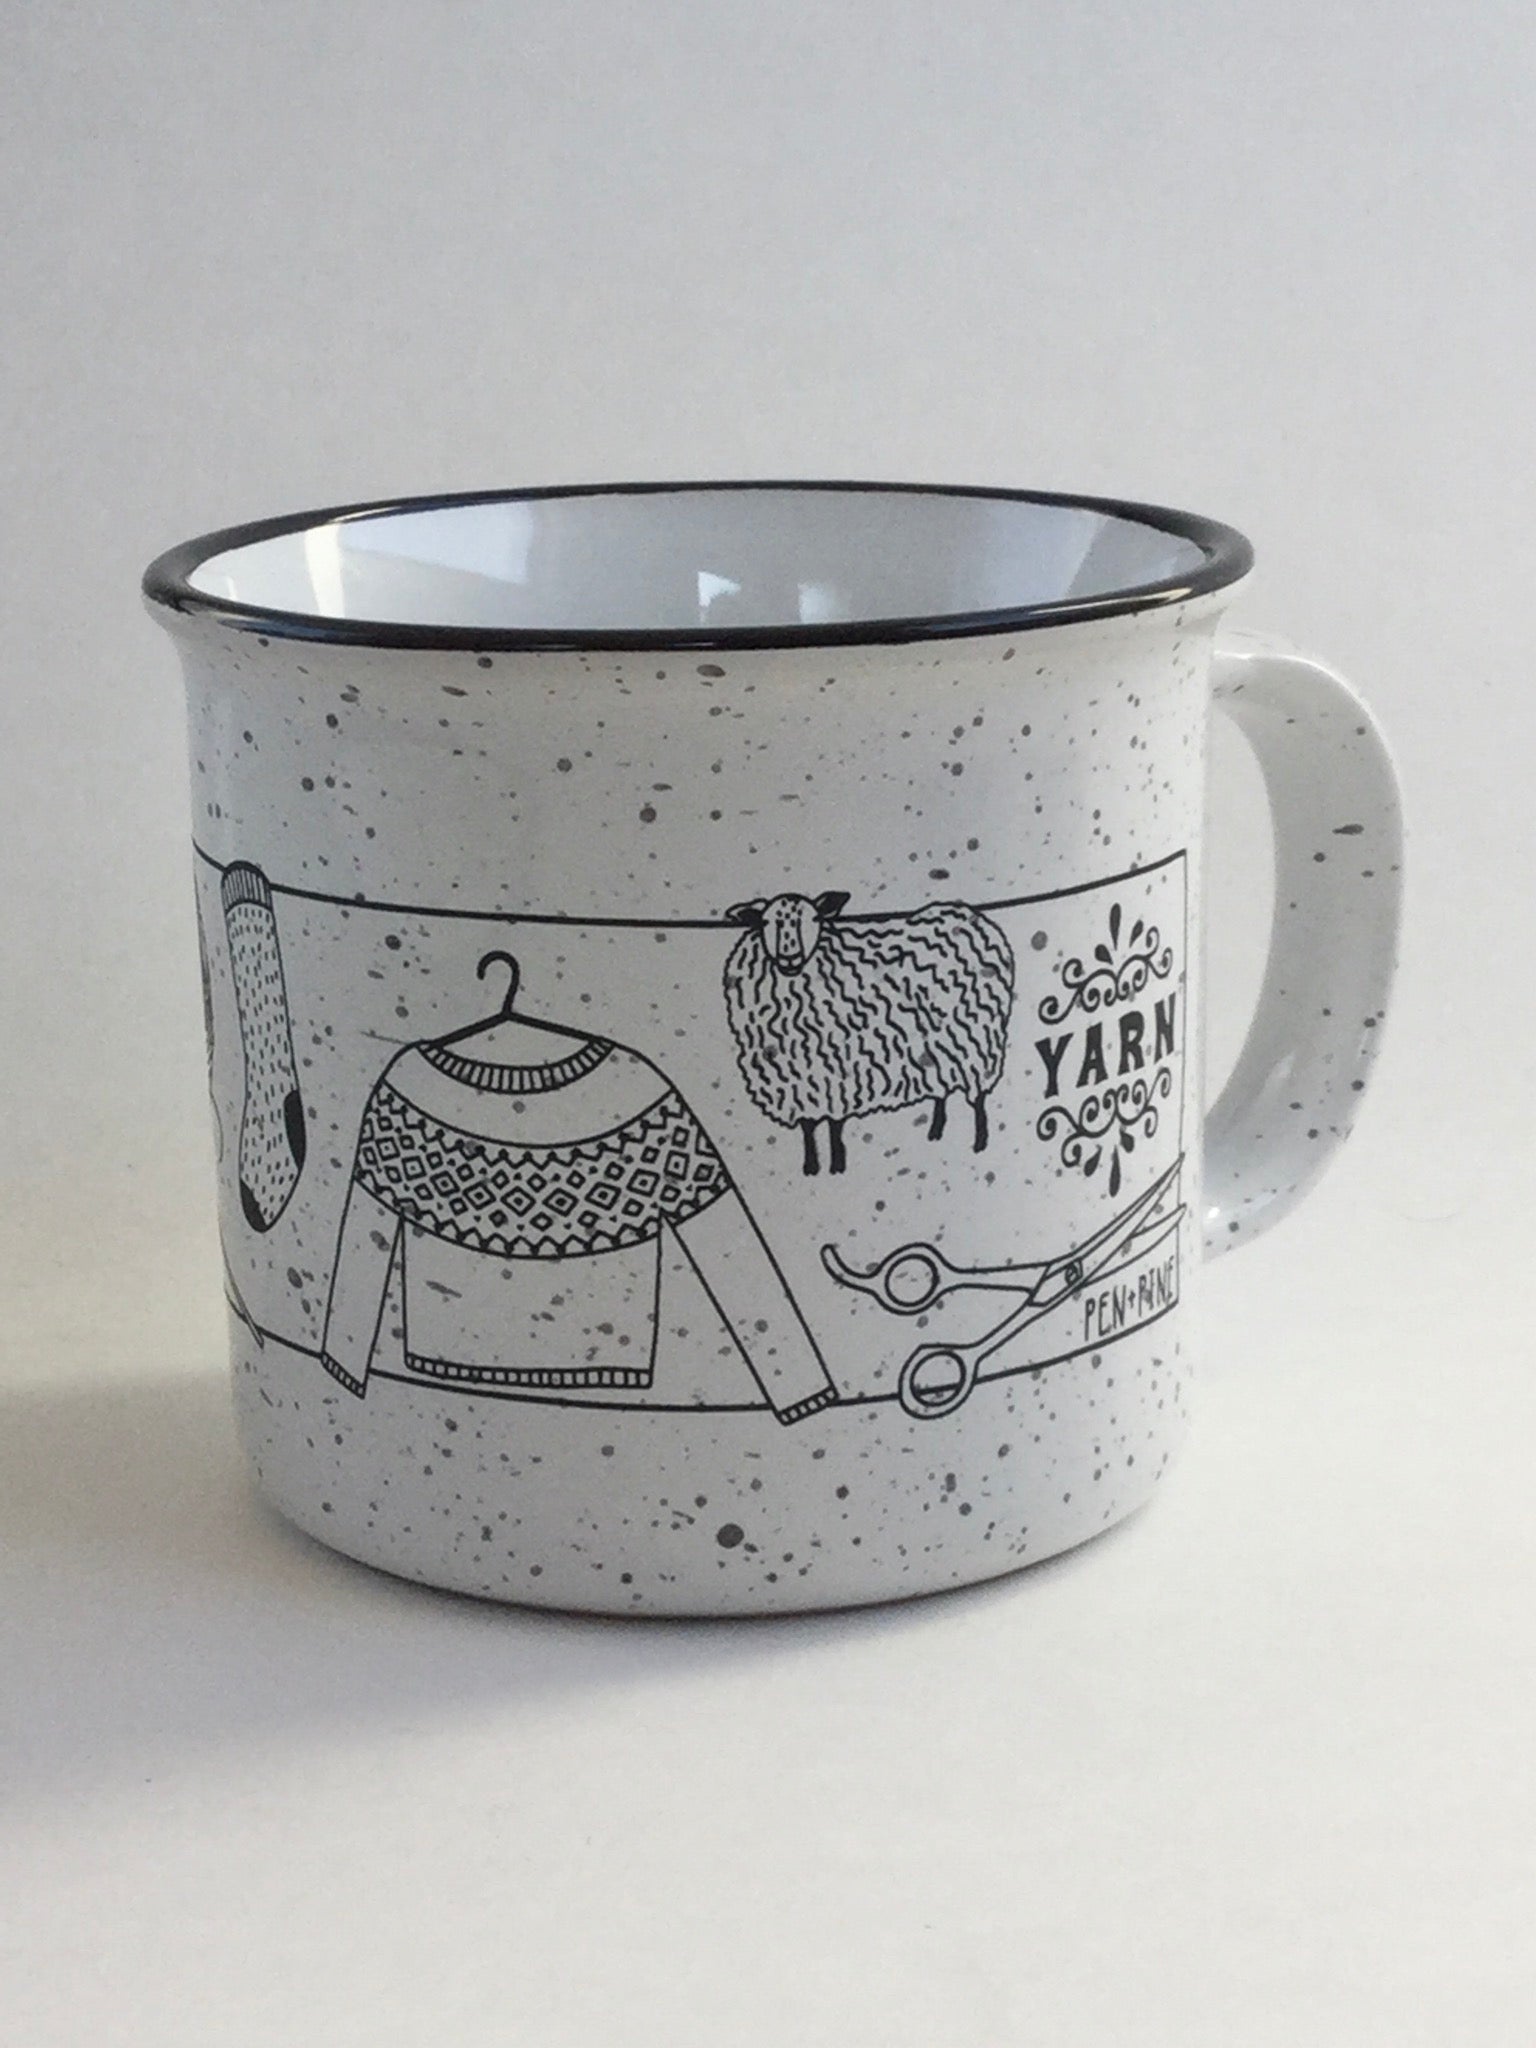 I Love Yarn mug